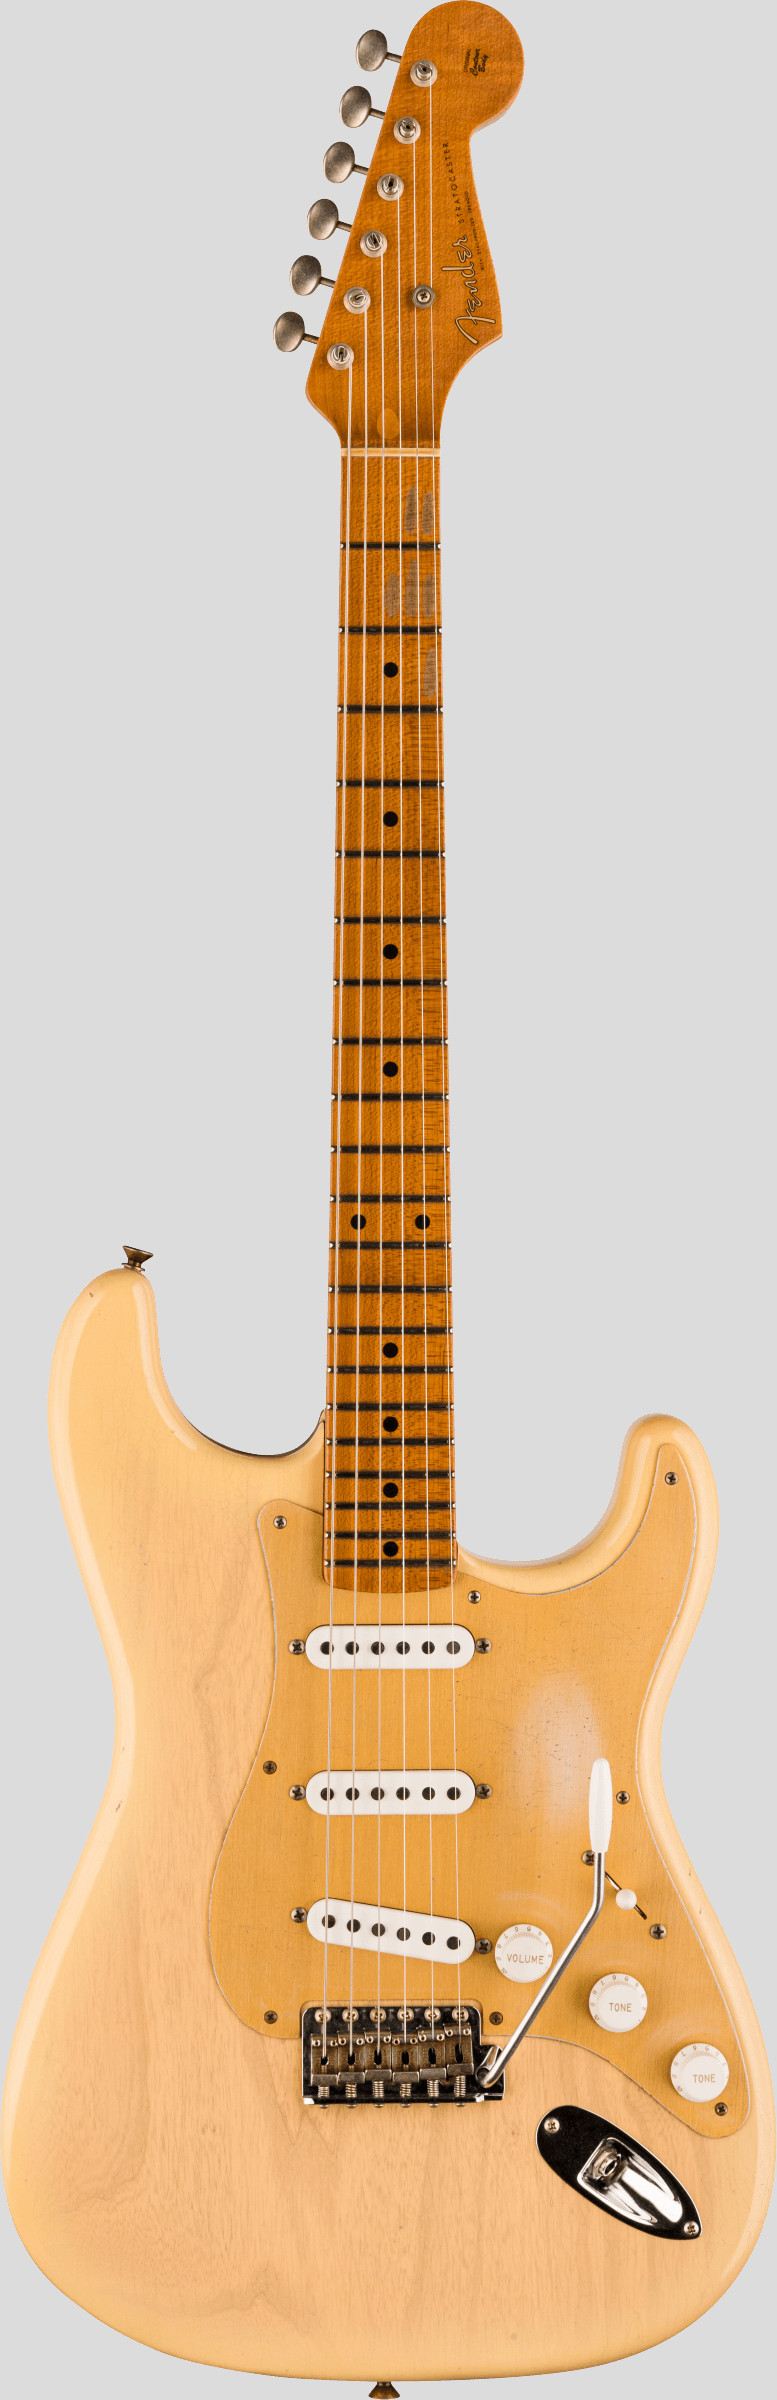 Fender Custom Shop Limited Edition 1954 Roasted Stratocaster Natural Blonde J.Relic 1